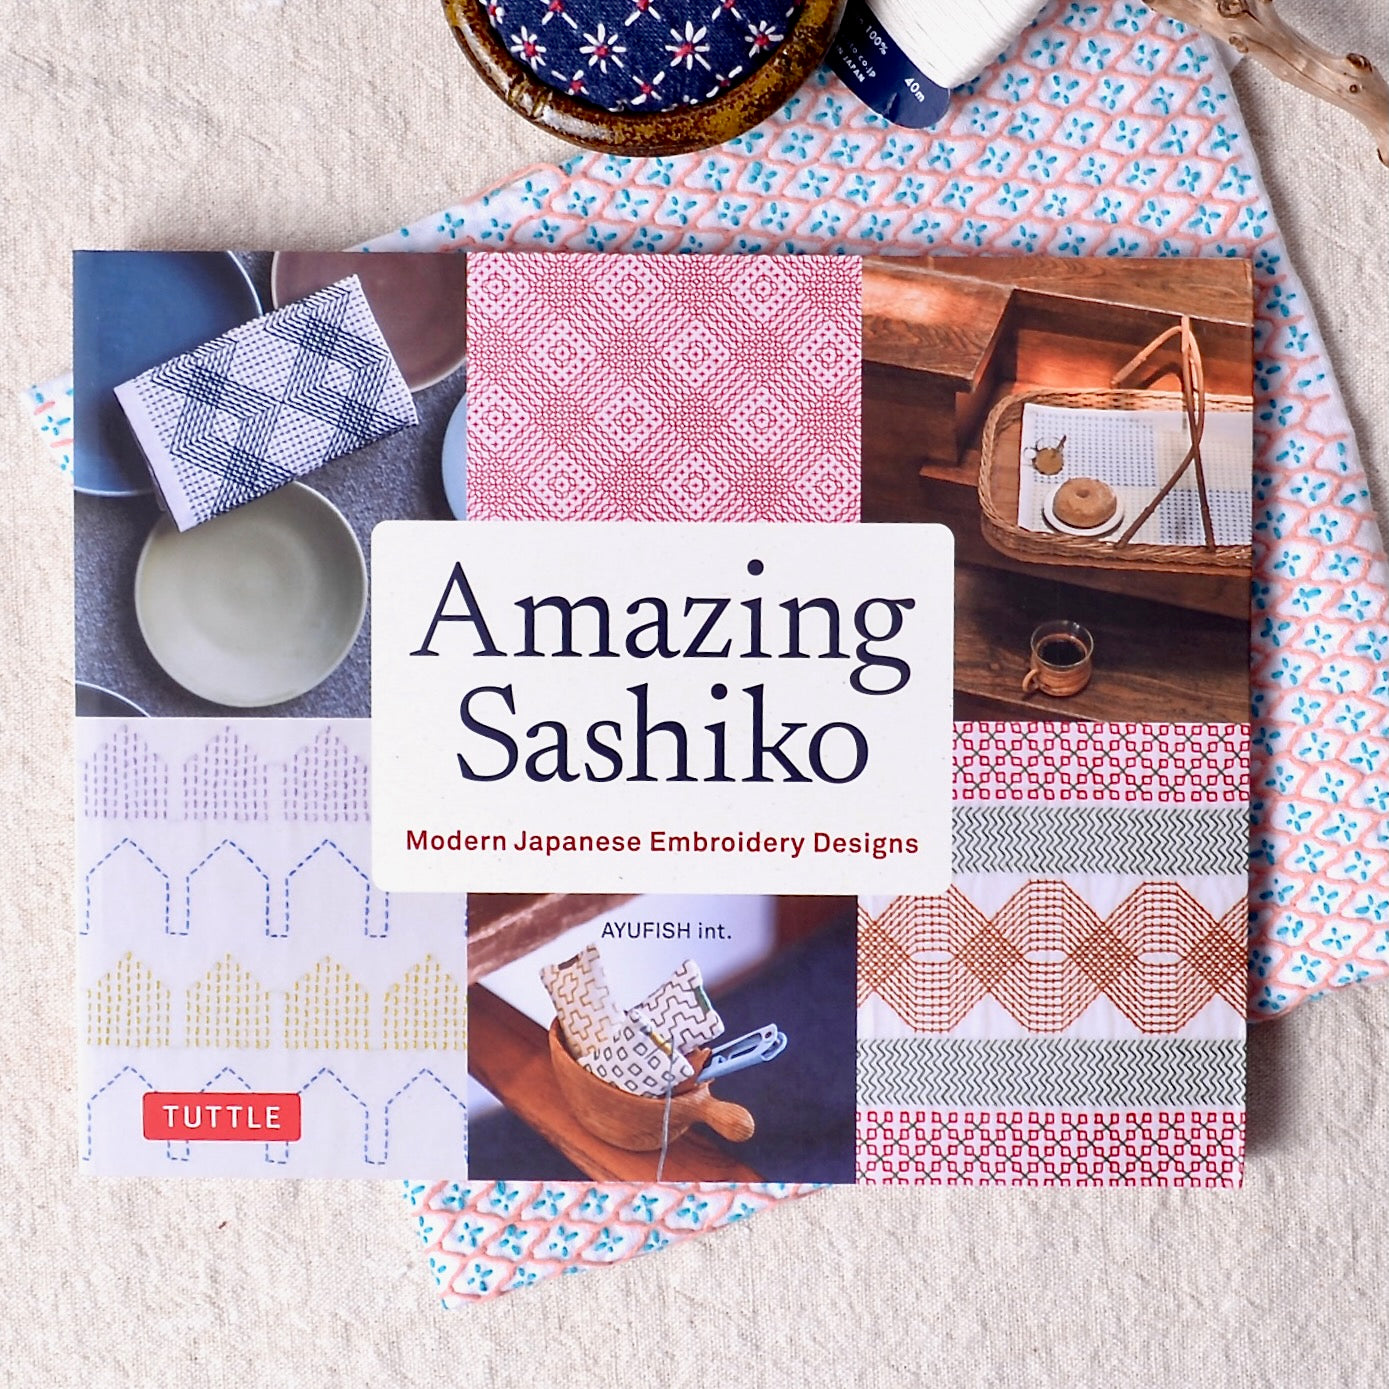 Japanese sashiko: The art of stitching stories